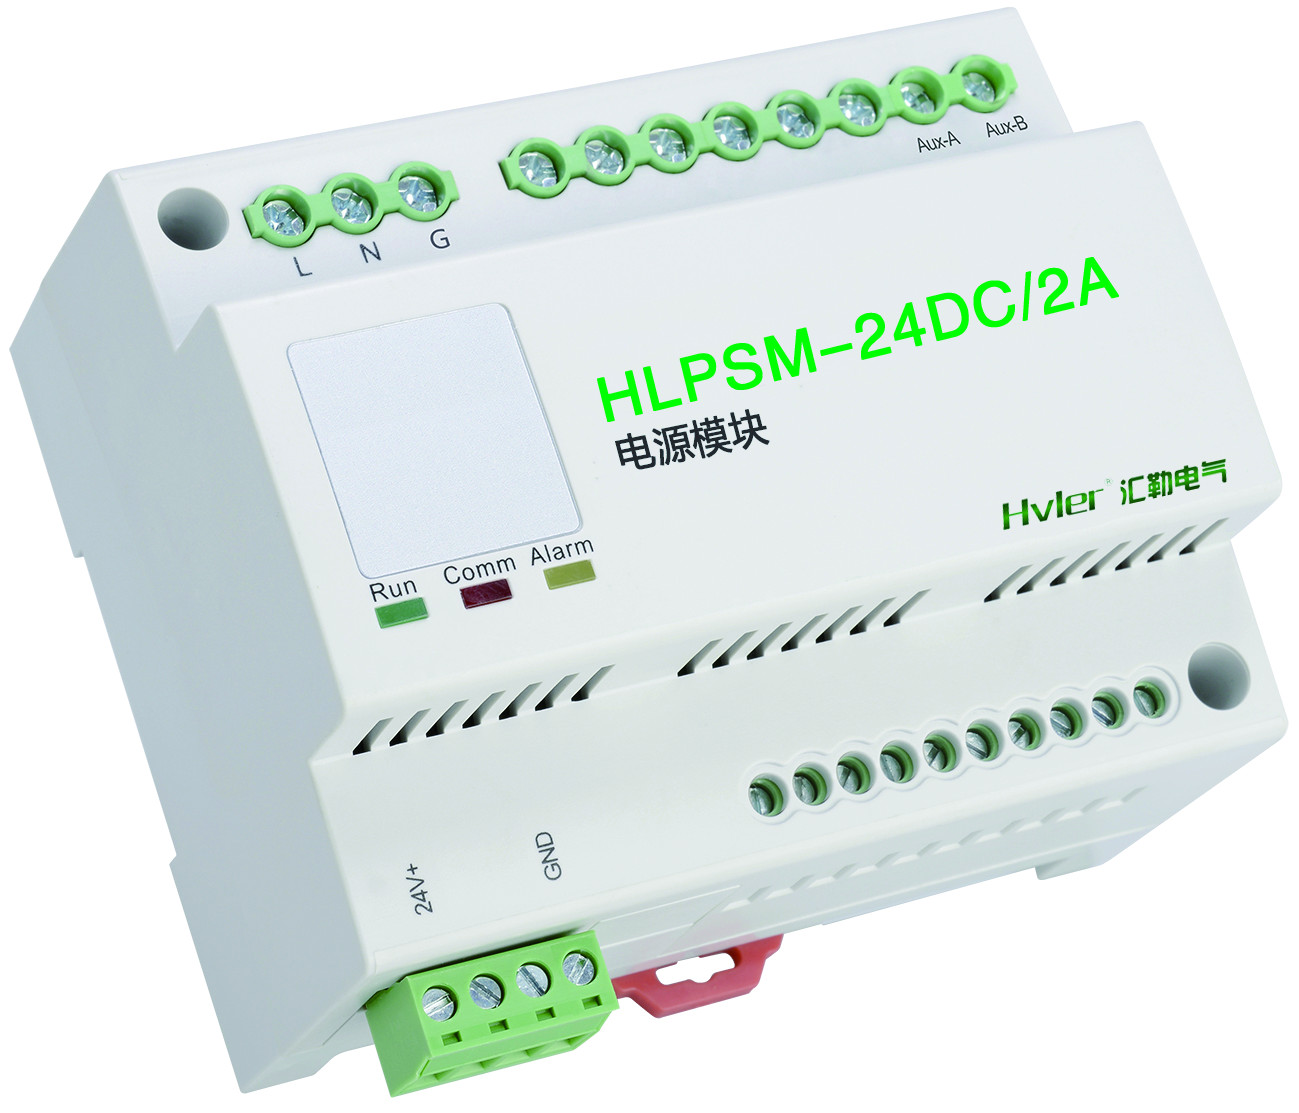 HLPSM-24DC/2A